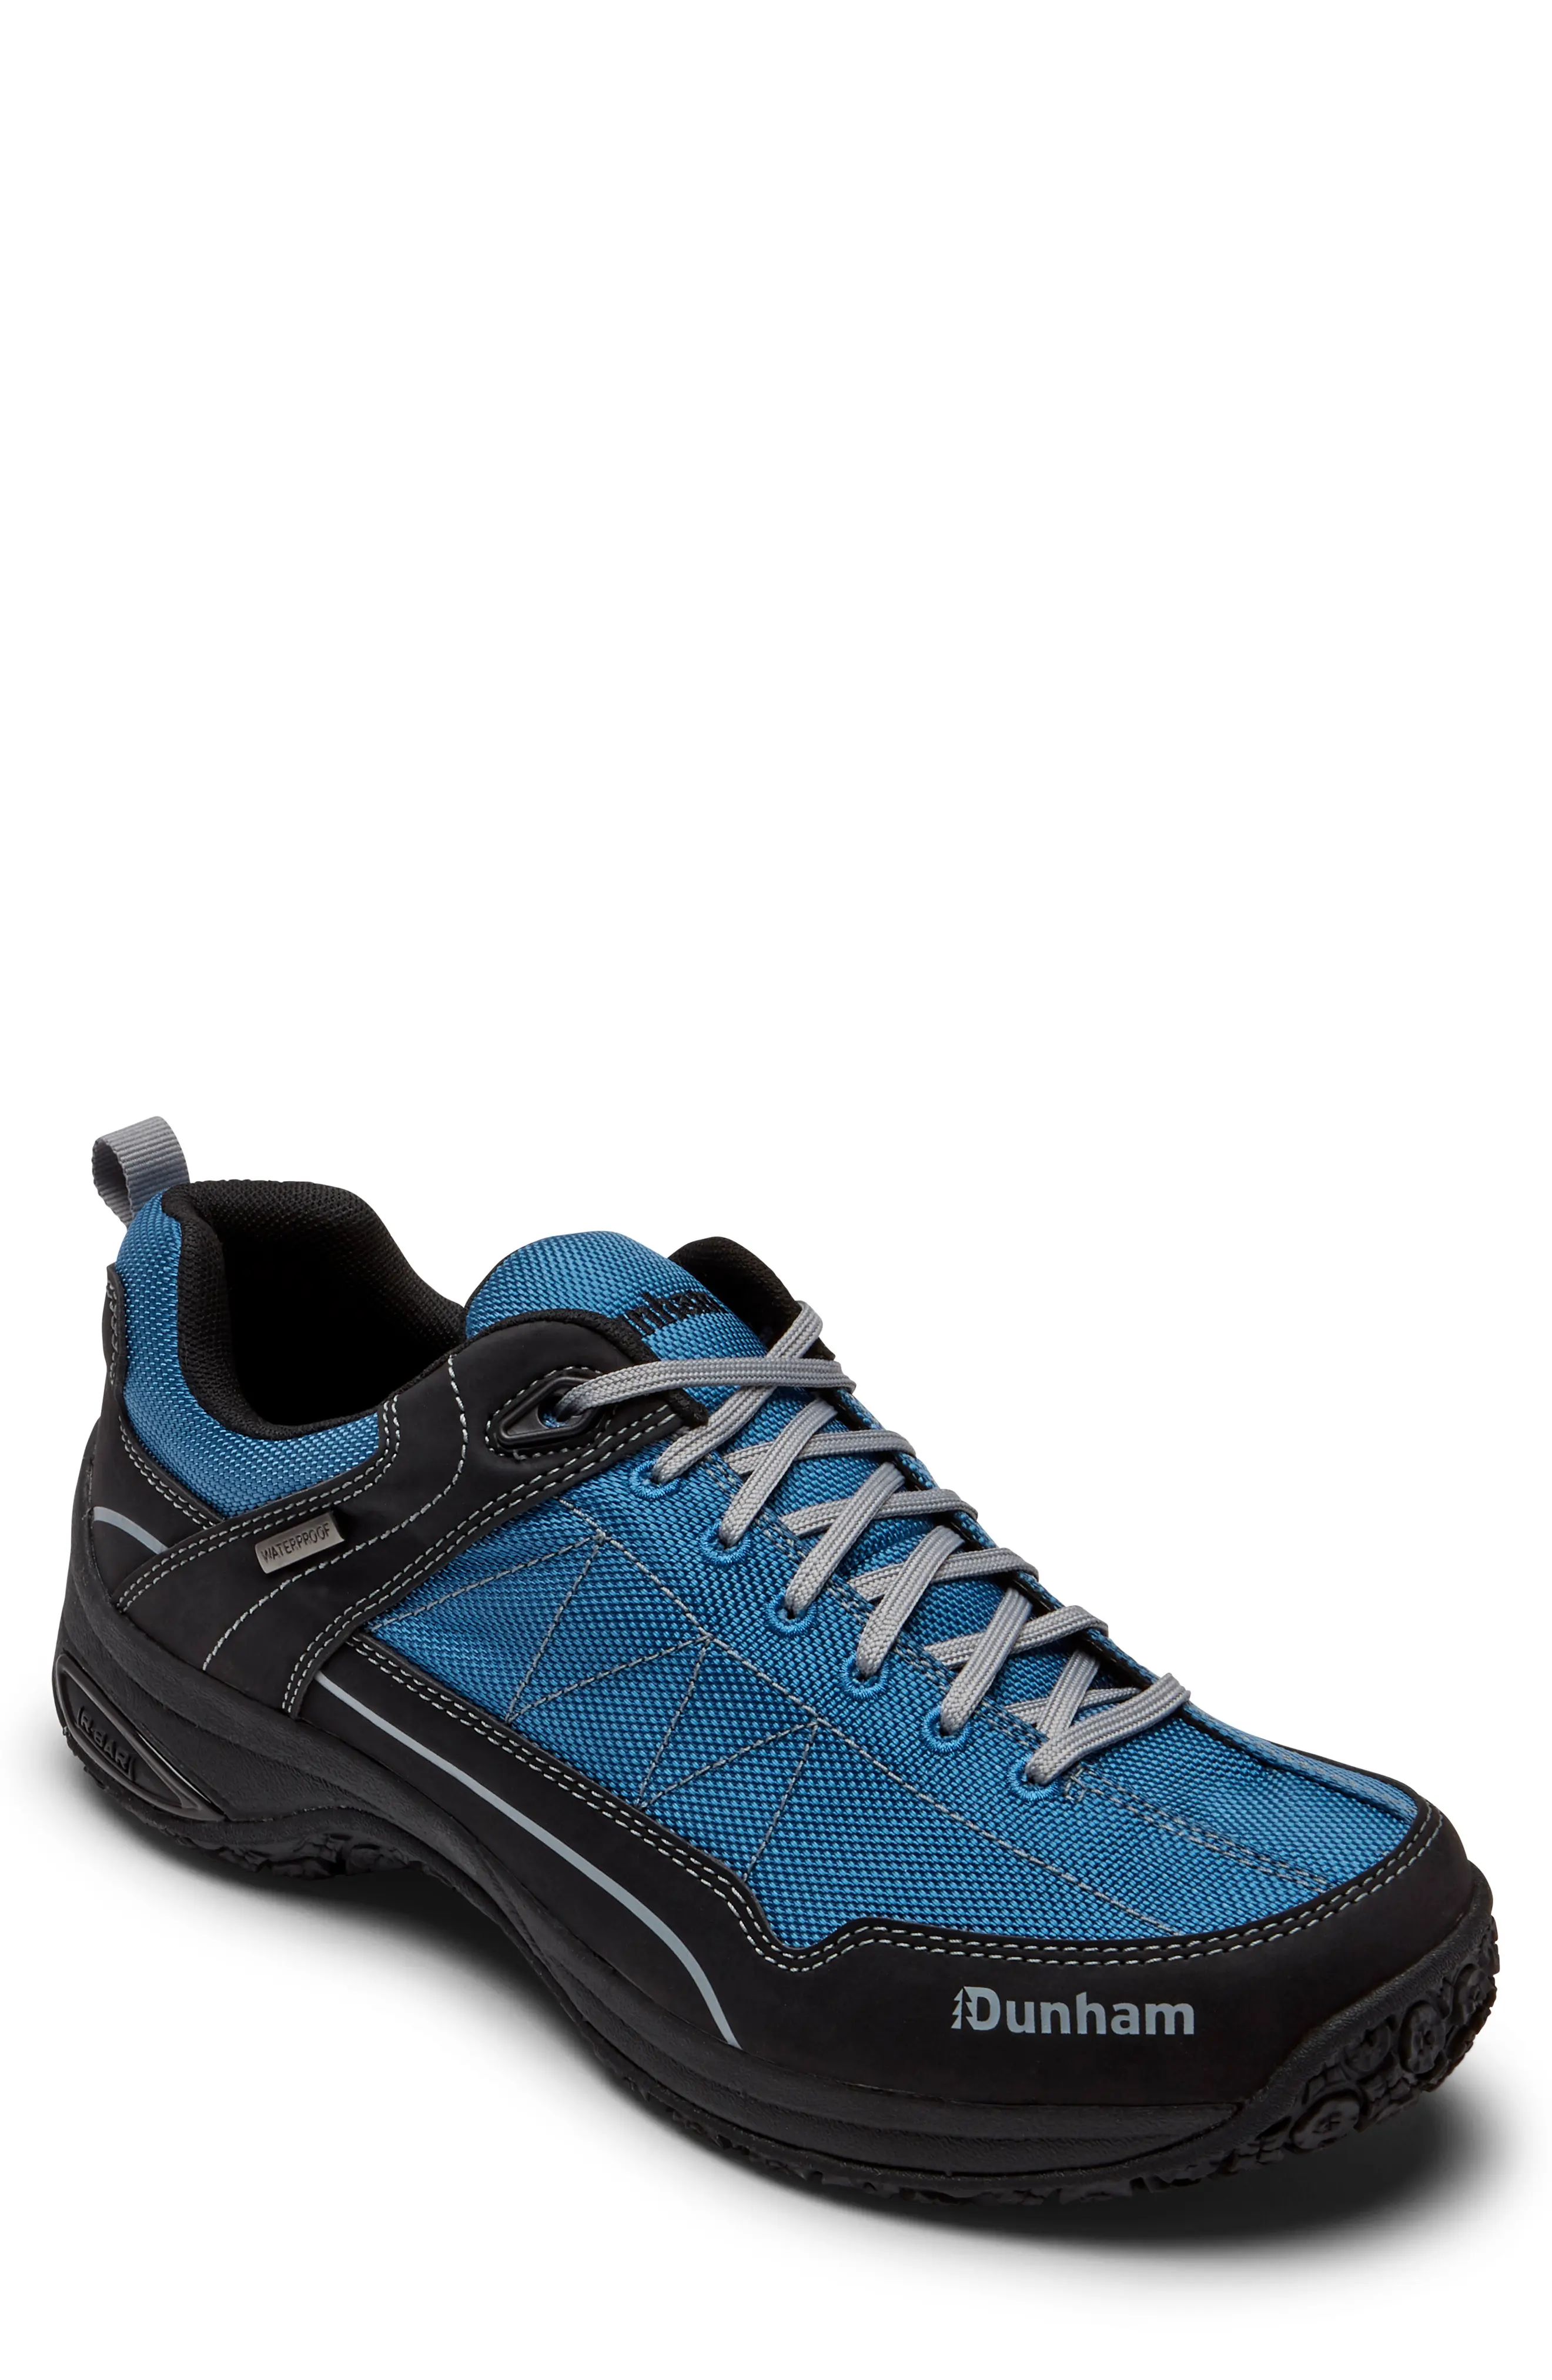 Men's Dunham Cloud Plus Waterproof Hiking Shoe, Size 9.5 EEEE - Blue | Nordstrom